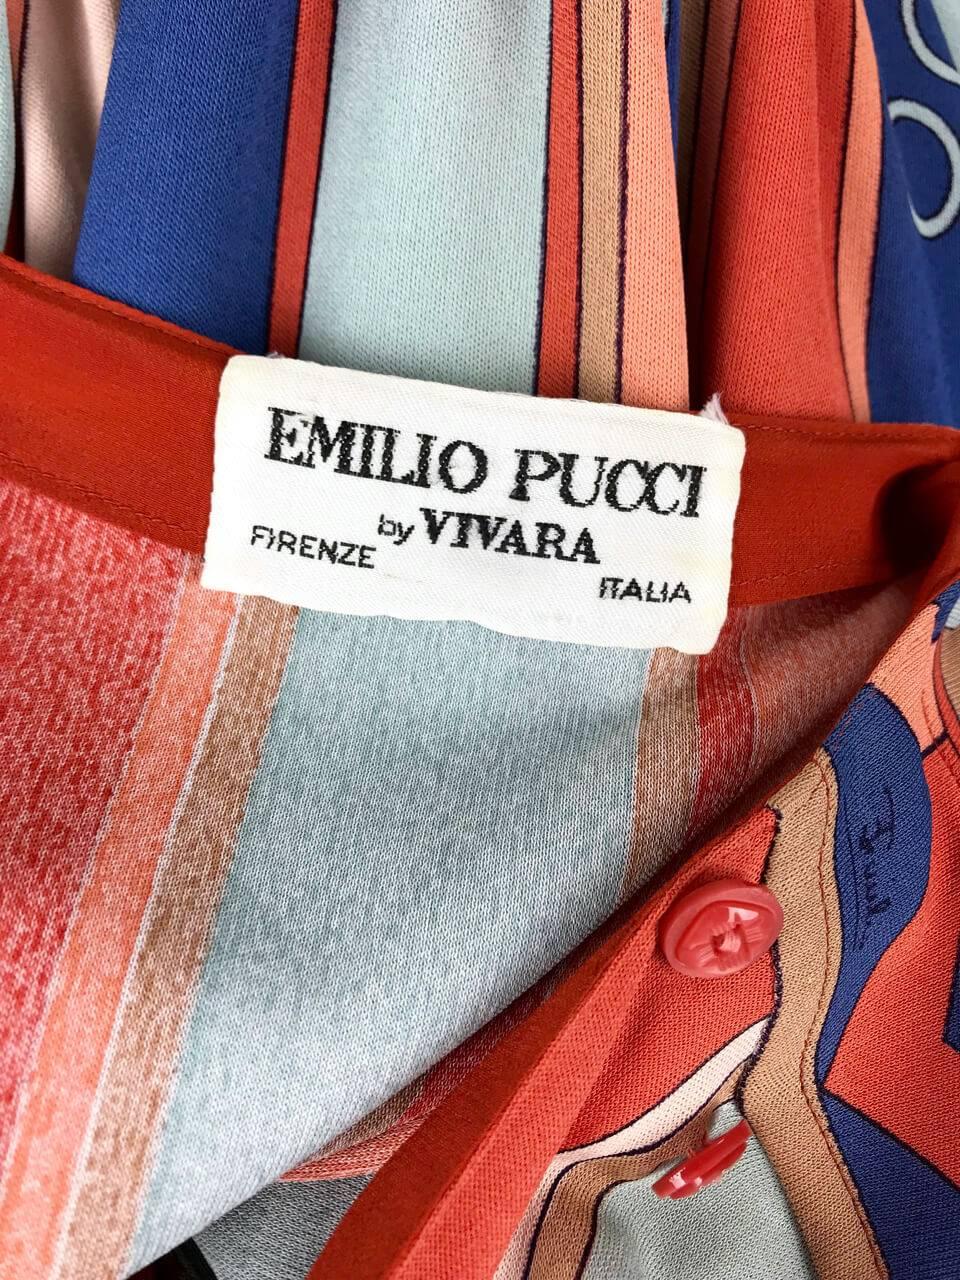 Emilio Pucci 1960s Vivara Art Déco Print Blue Rose Silk Jersey Drop Waist Dress 3